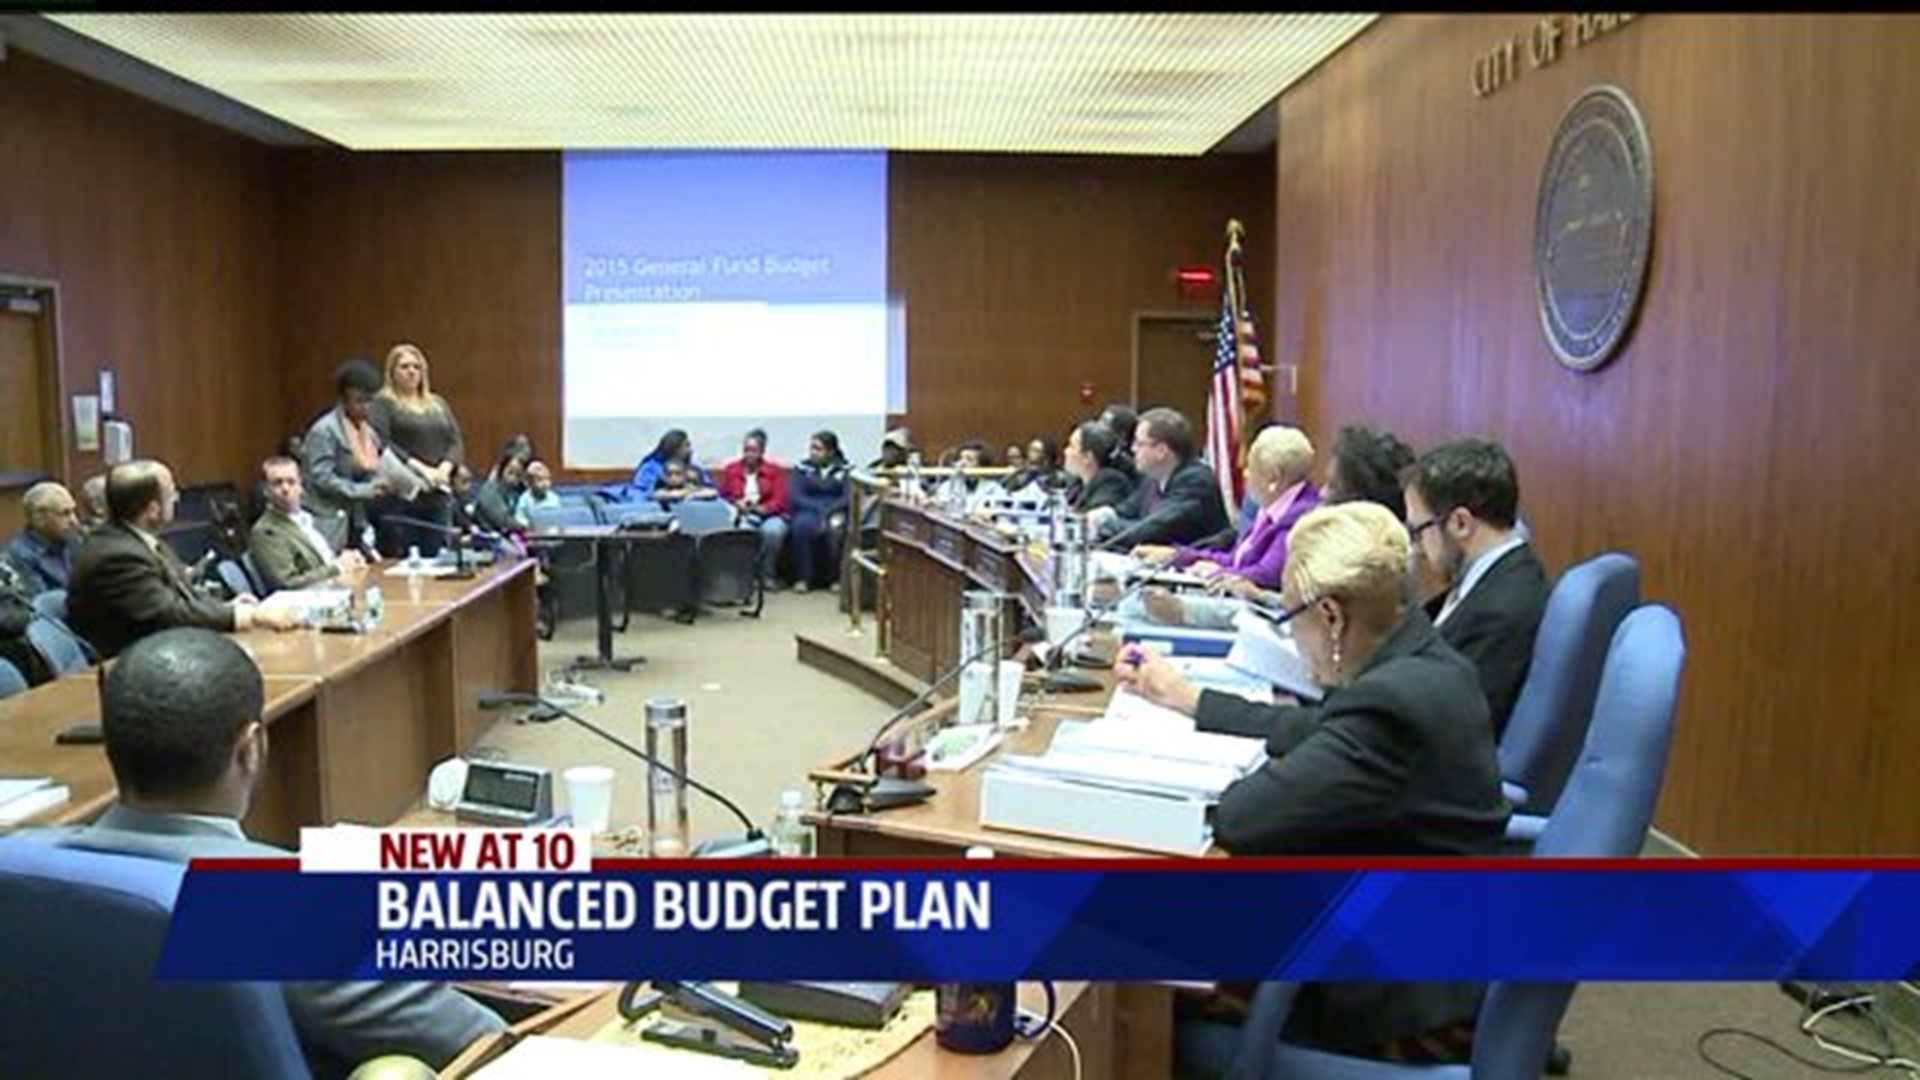 A Balanced Budget Plan for Harrisburg